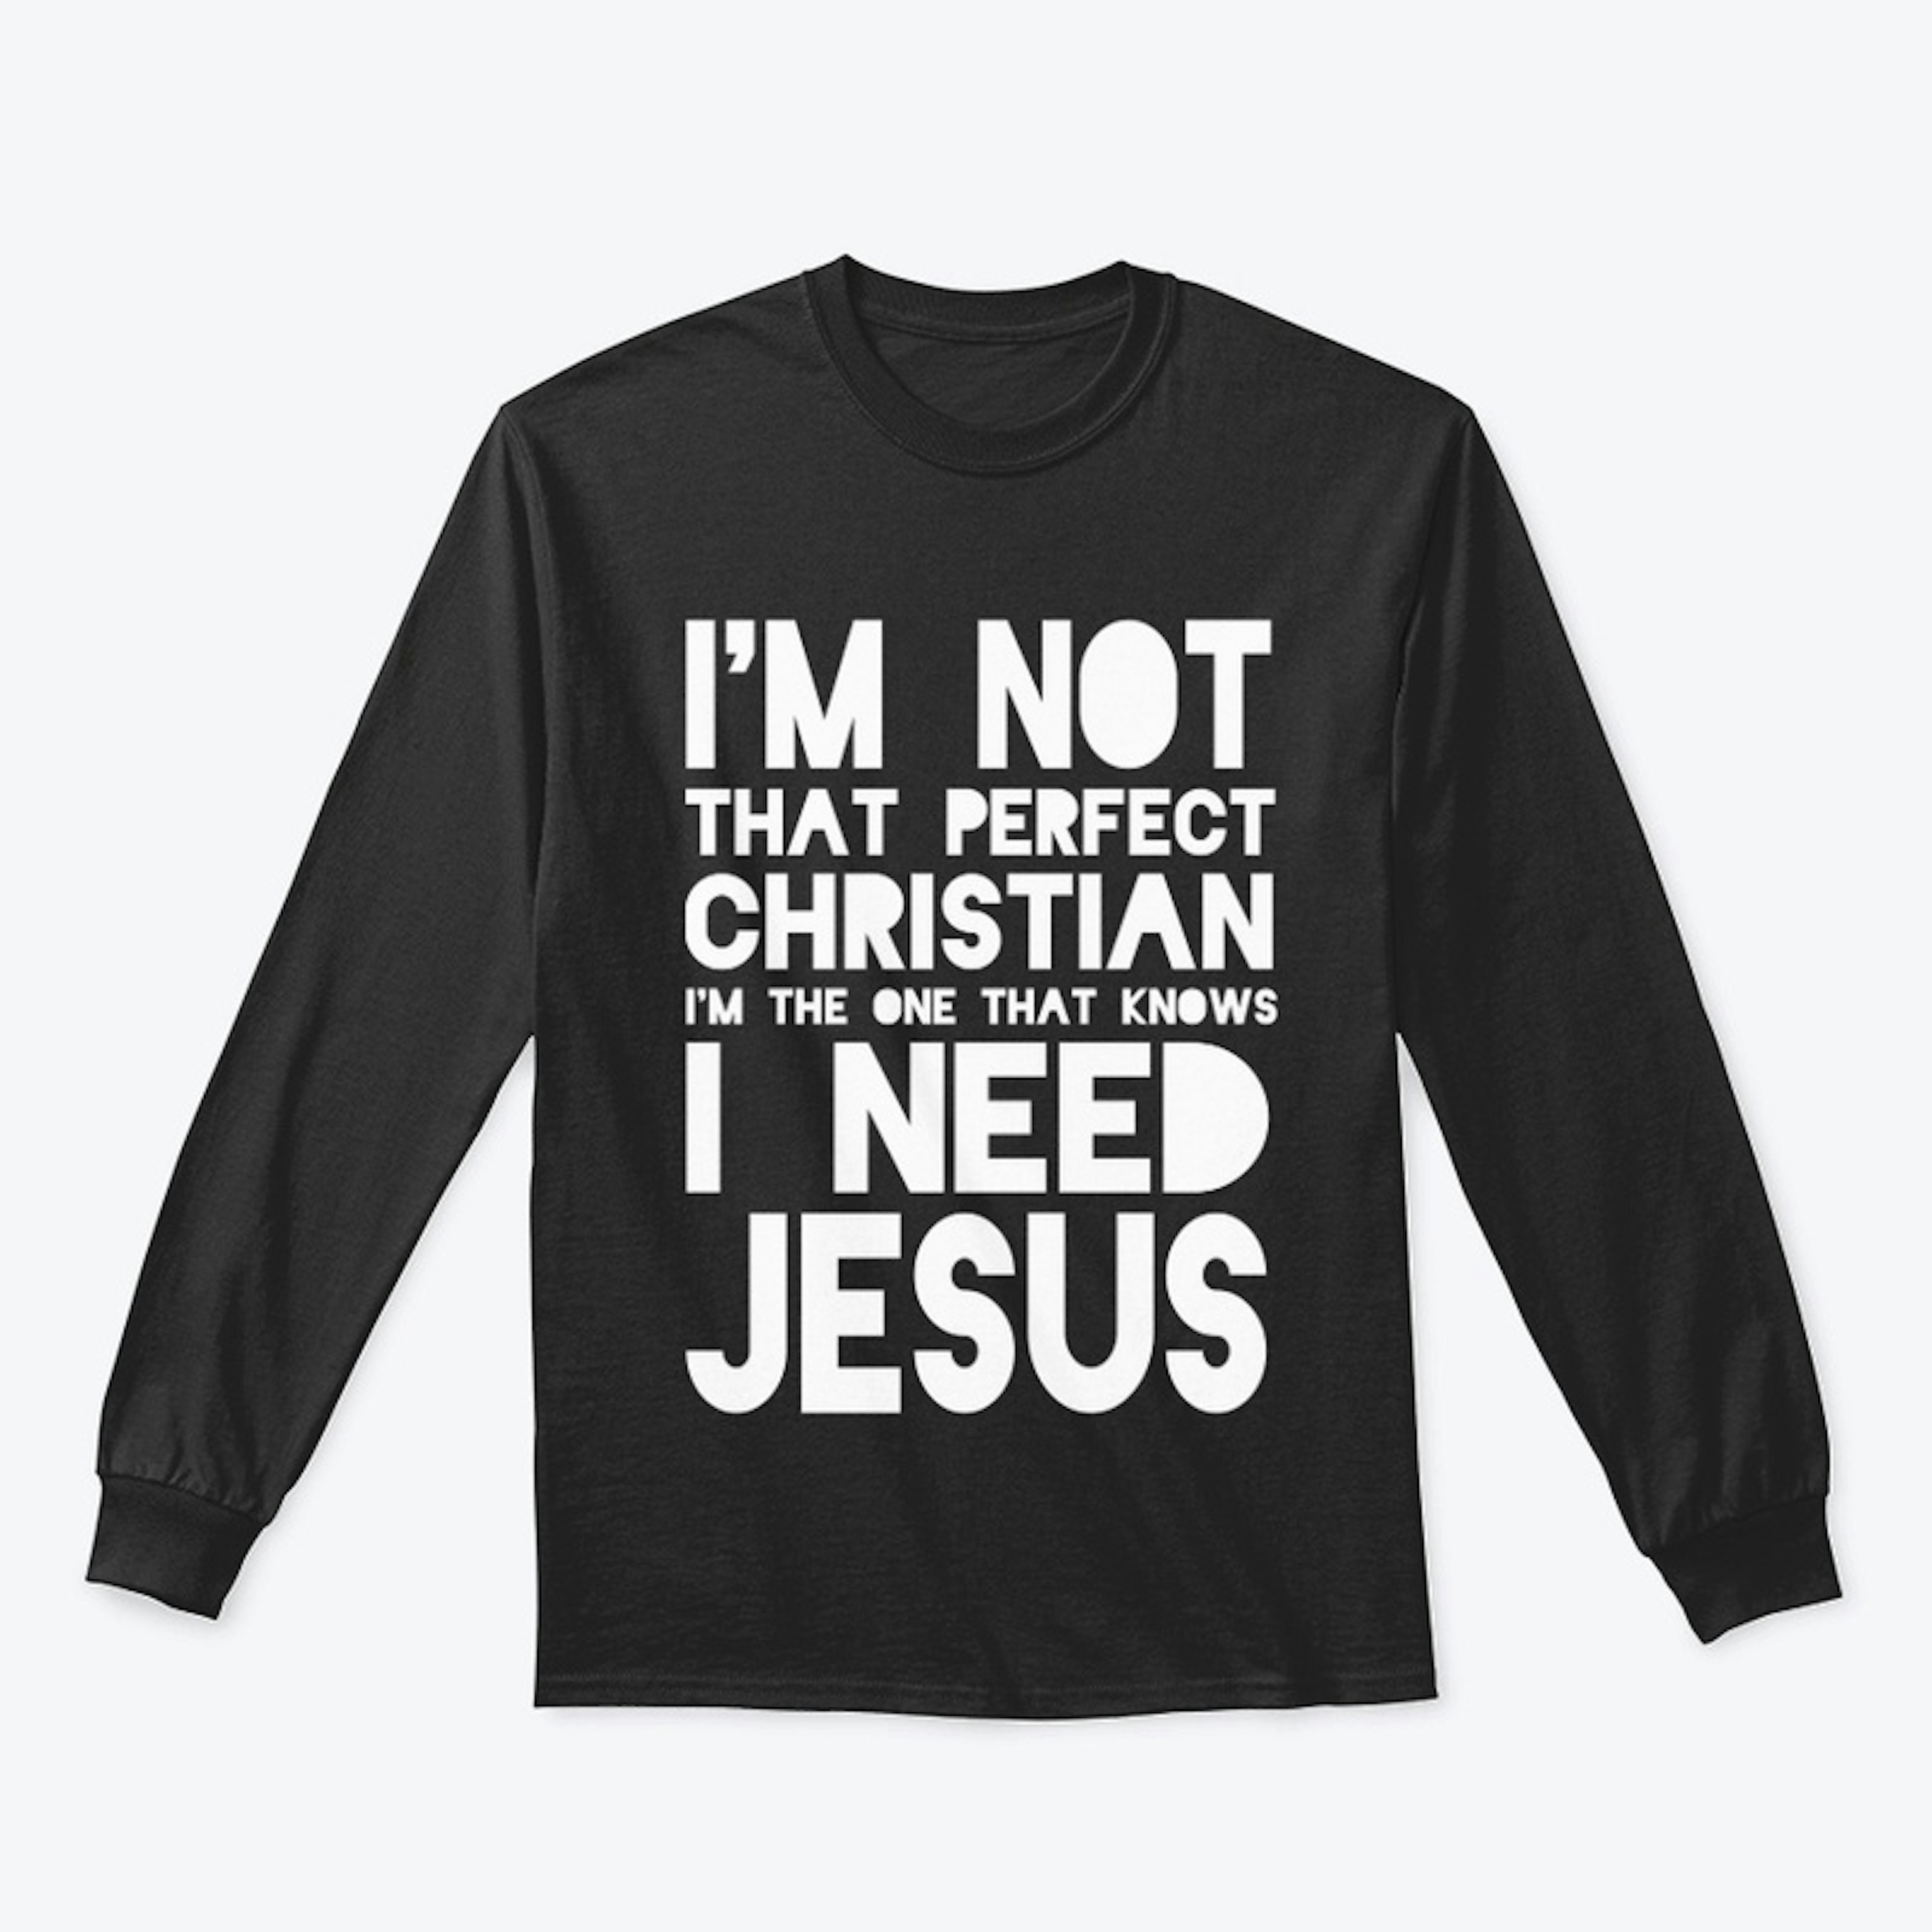 I NEED JESUS shirt!